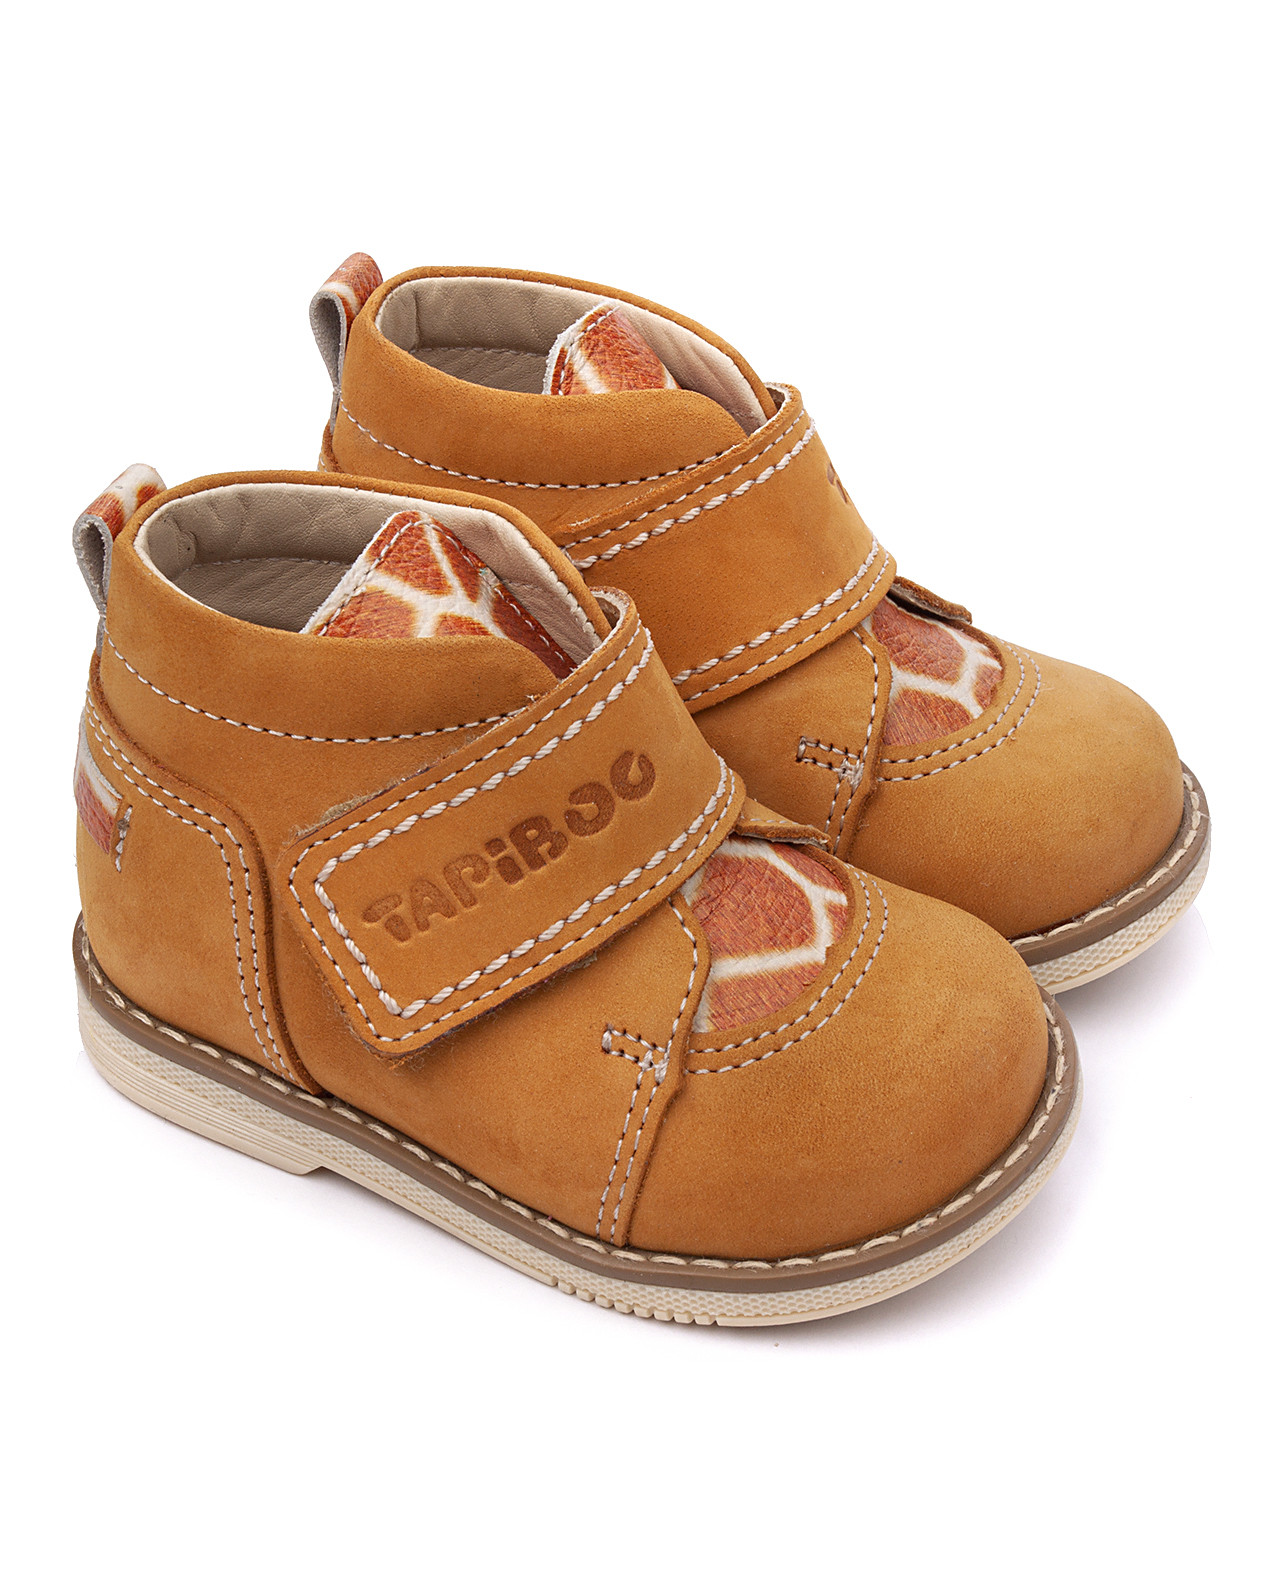 ботинки детские 24015 нарцисс коричневый твид 2021 р19 Ботинки ДЕТСКИЕ TAPIBOO Нарцисс жираф (76480, 25)